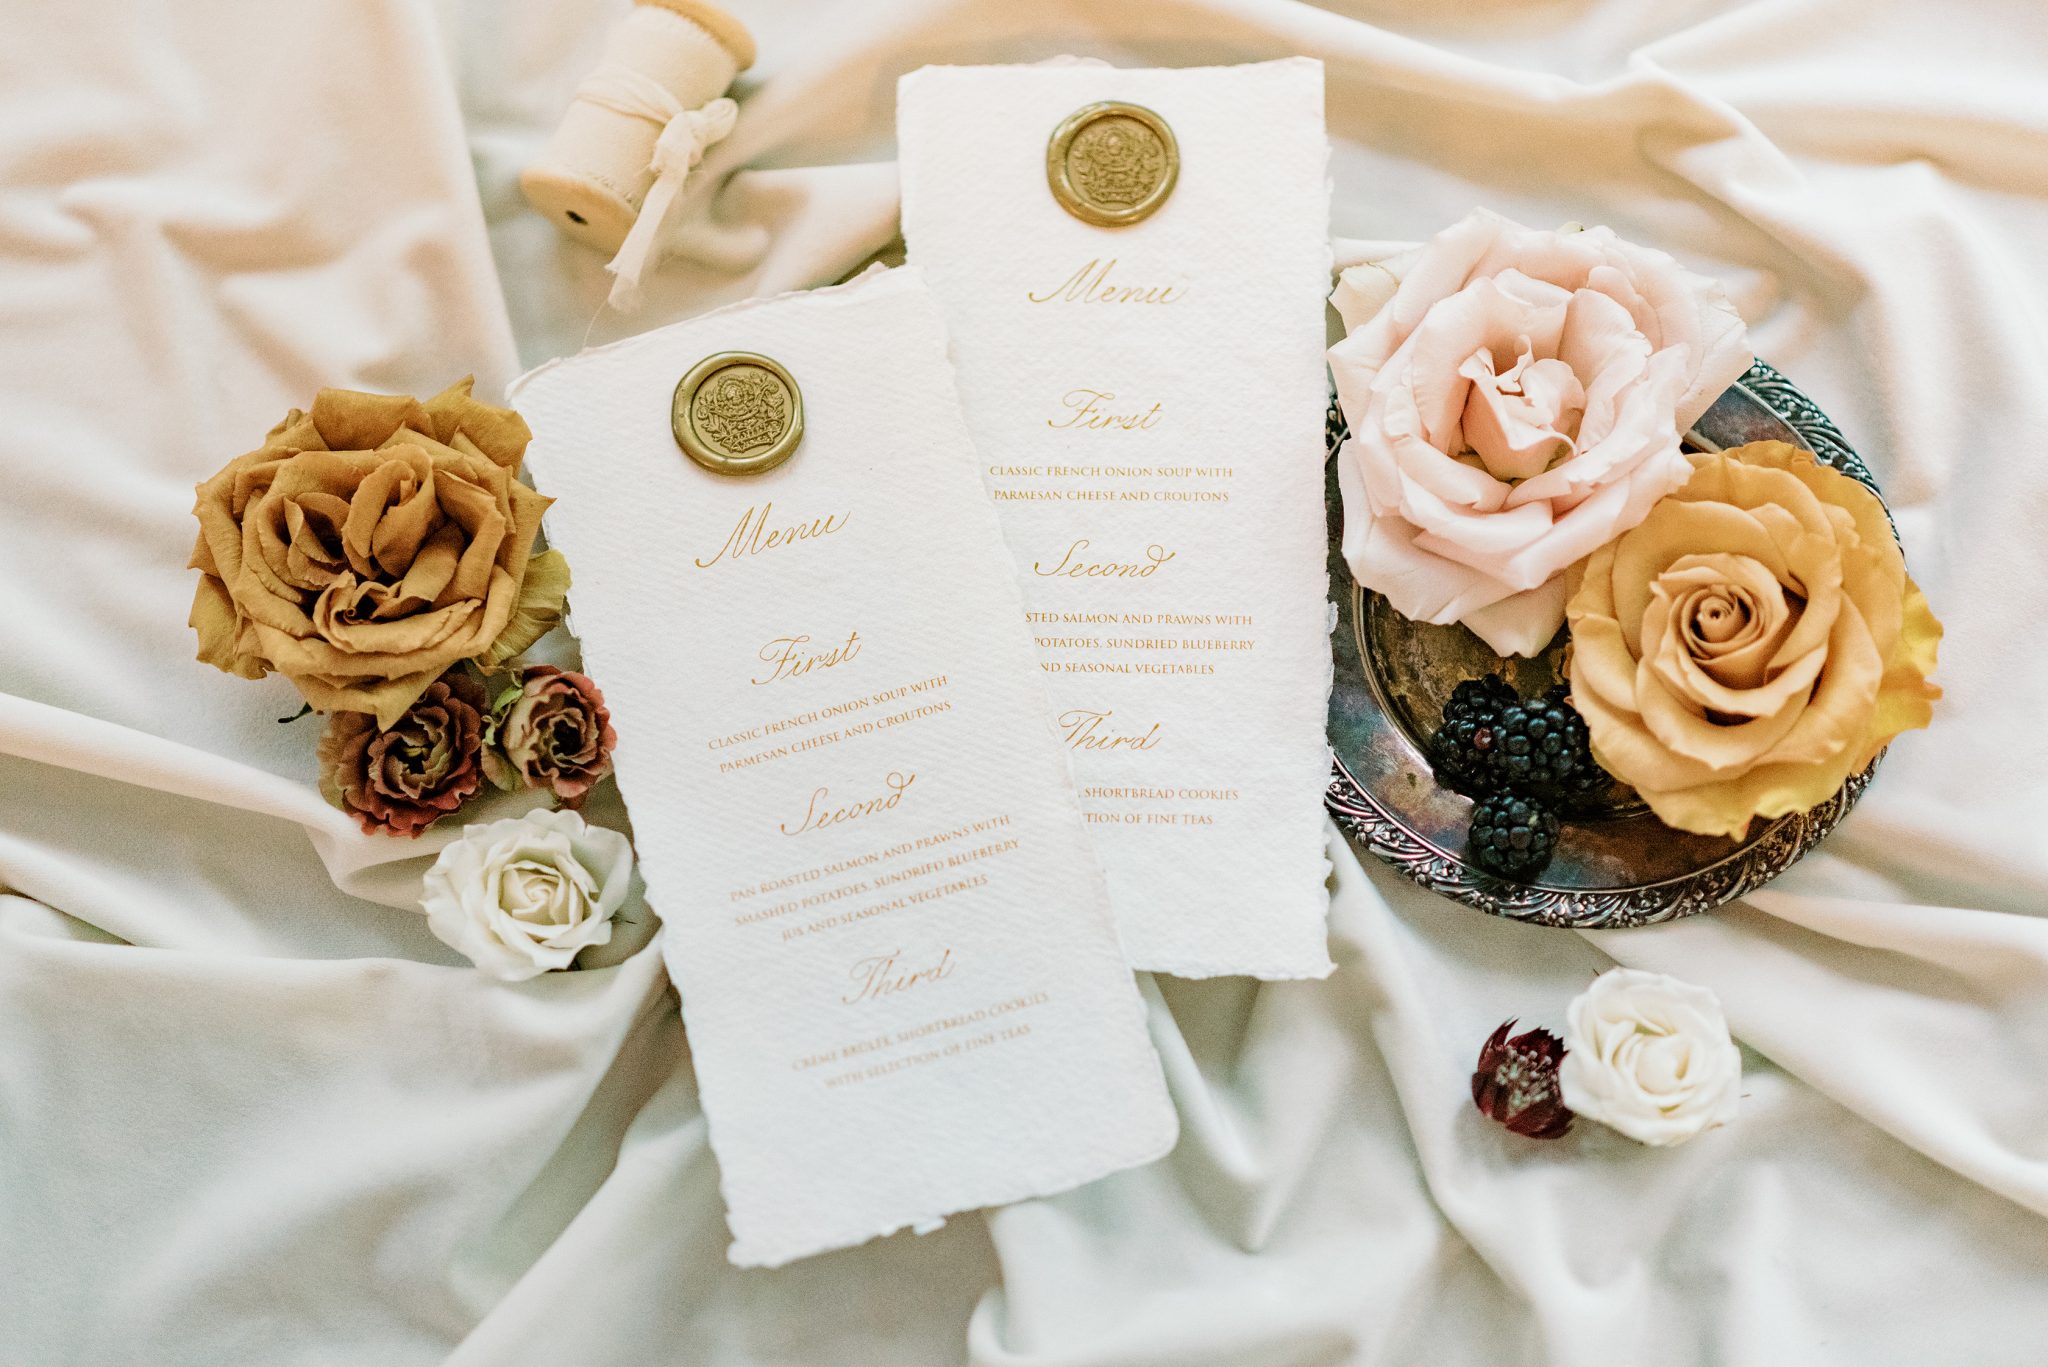 Wedding stationery for romantic and enchanting wedding inspiration